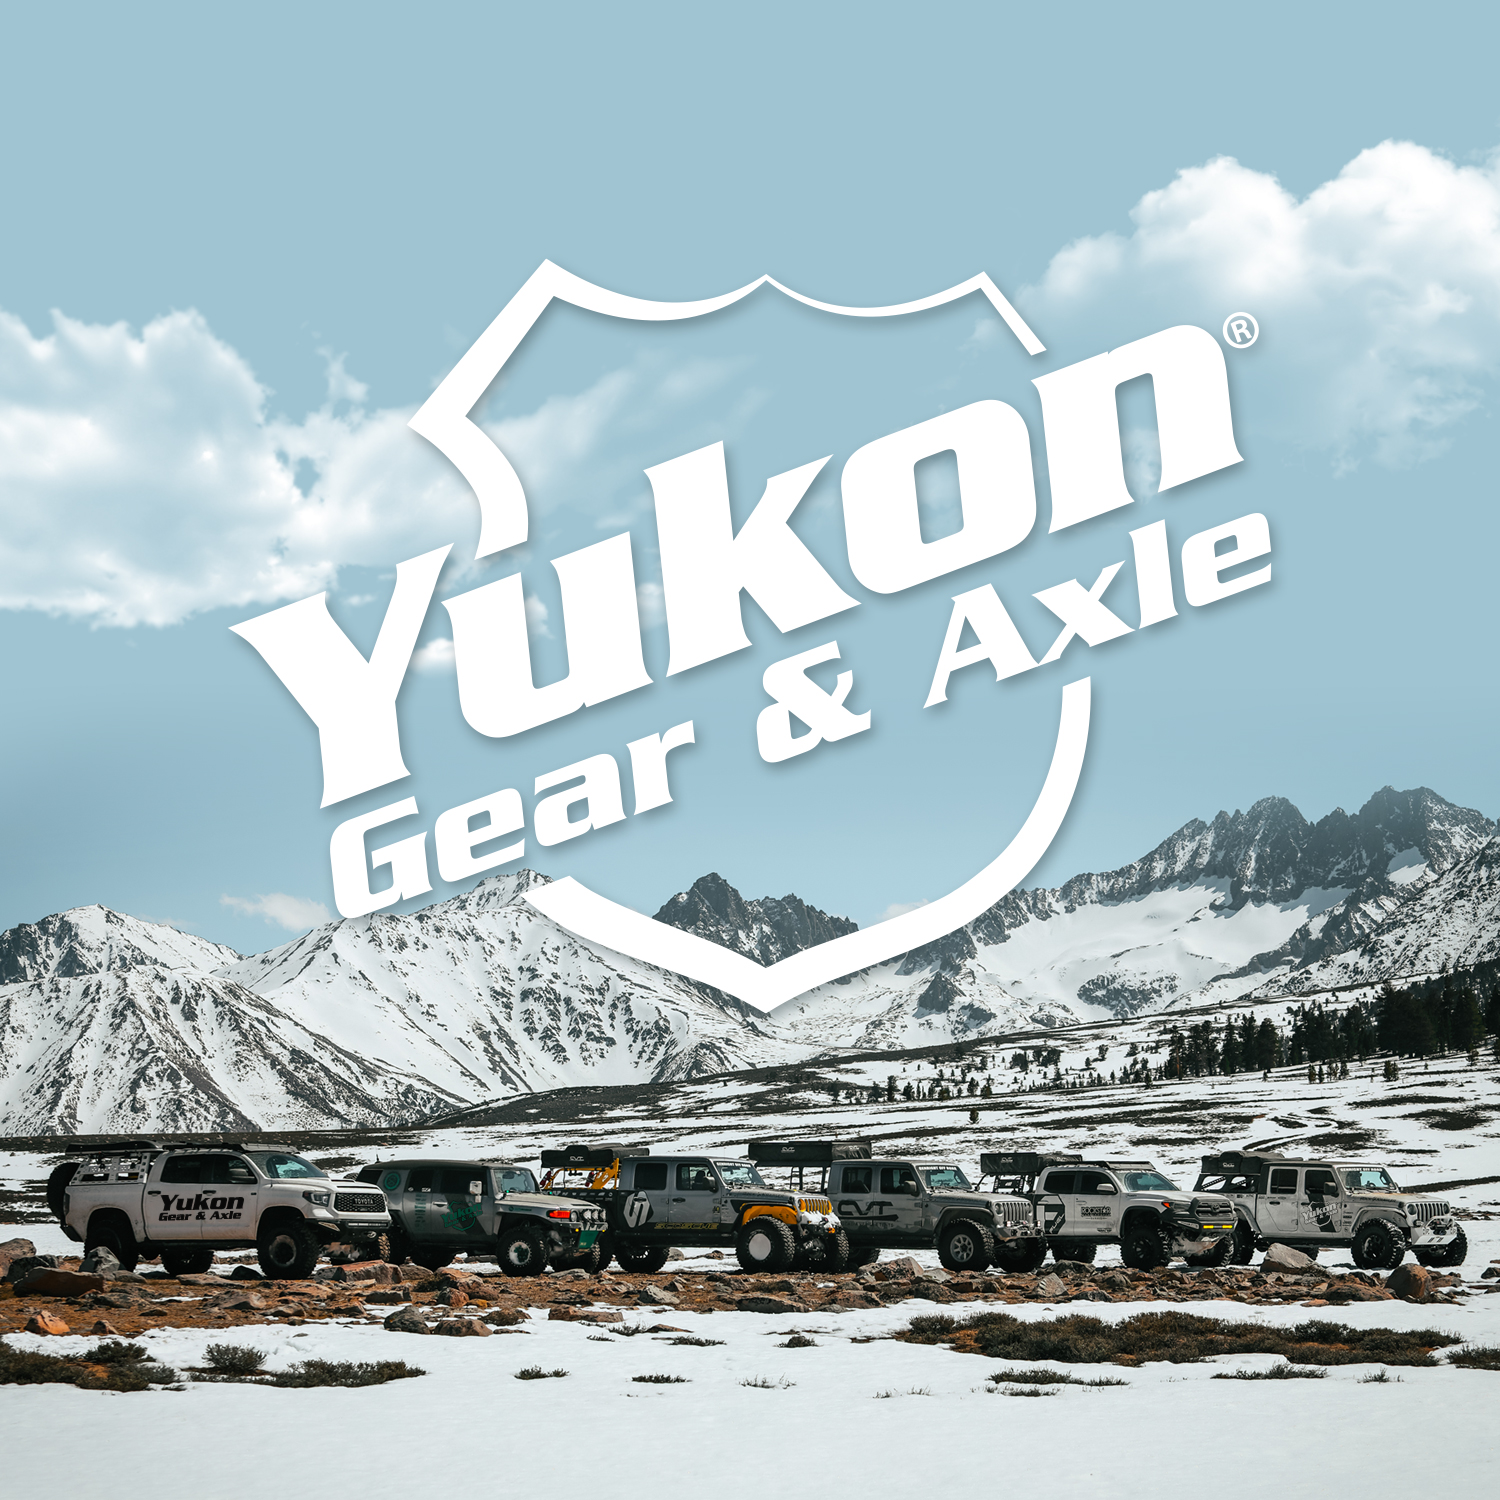 Yukon high performance replacement ring & pinion set, Dana M300, 3.73 ratio 